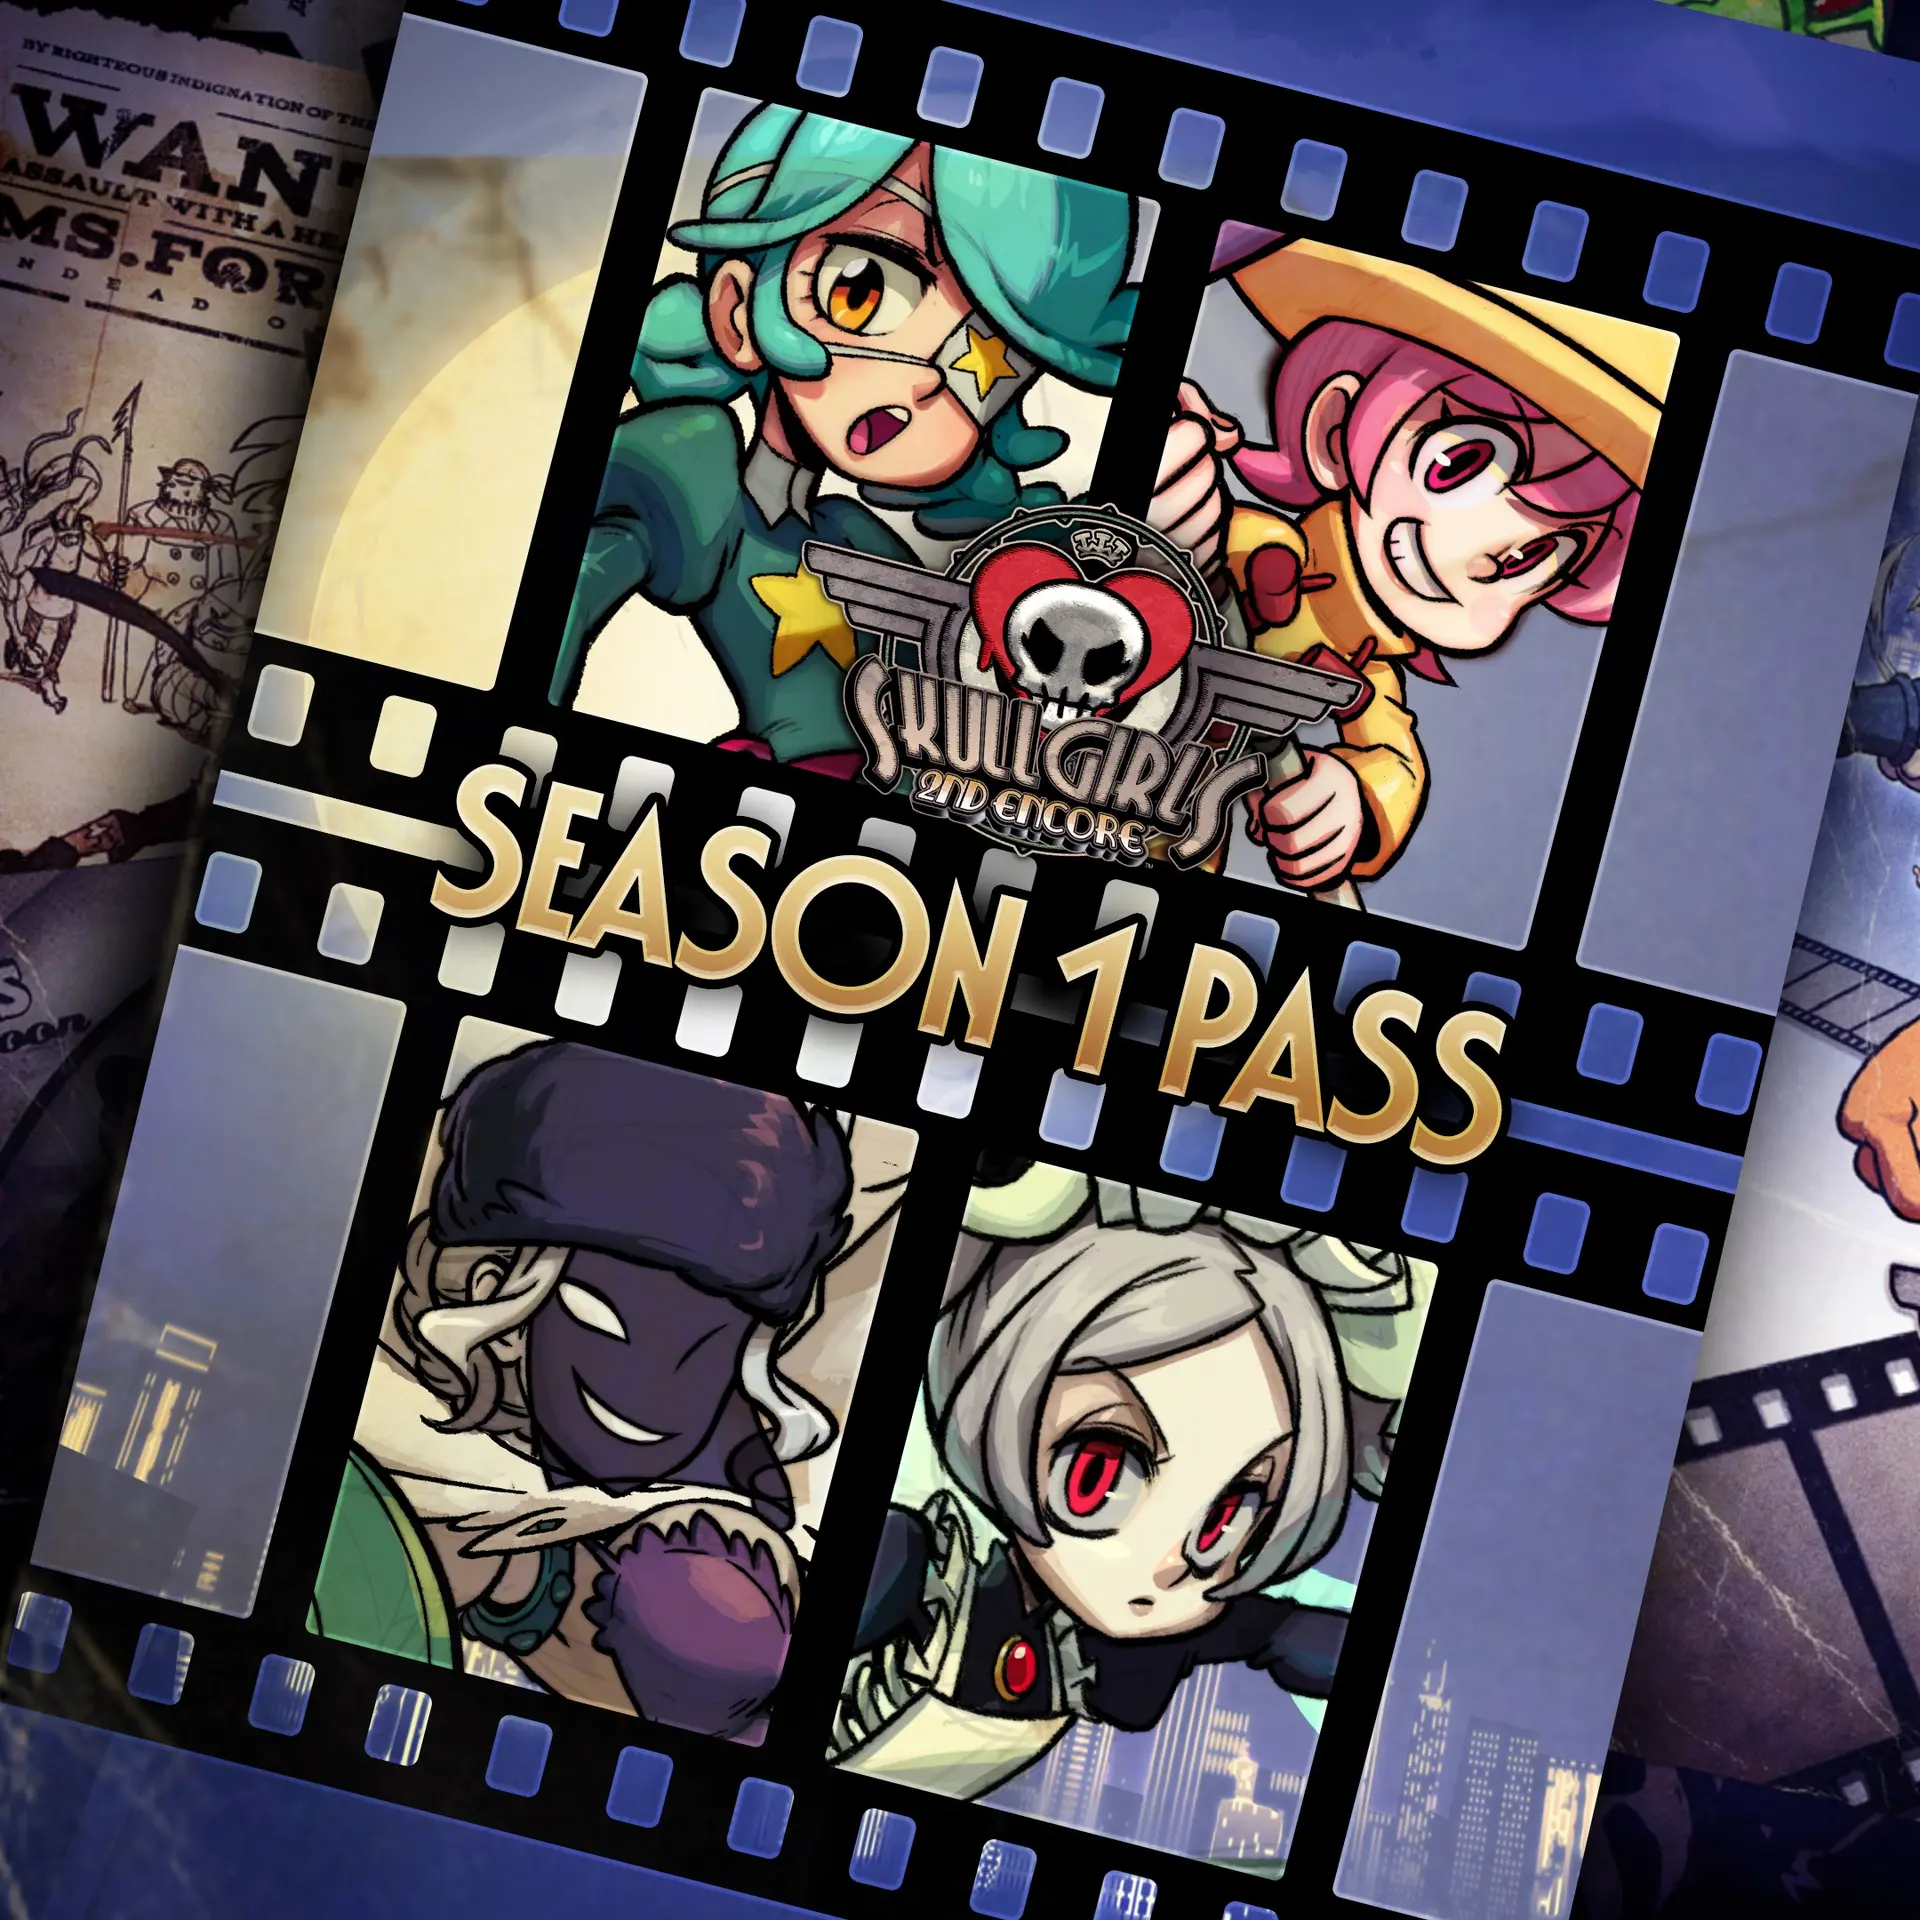 Skullgirls: Season 1 Pass (Xbox Games BR)